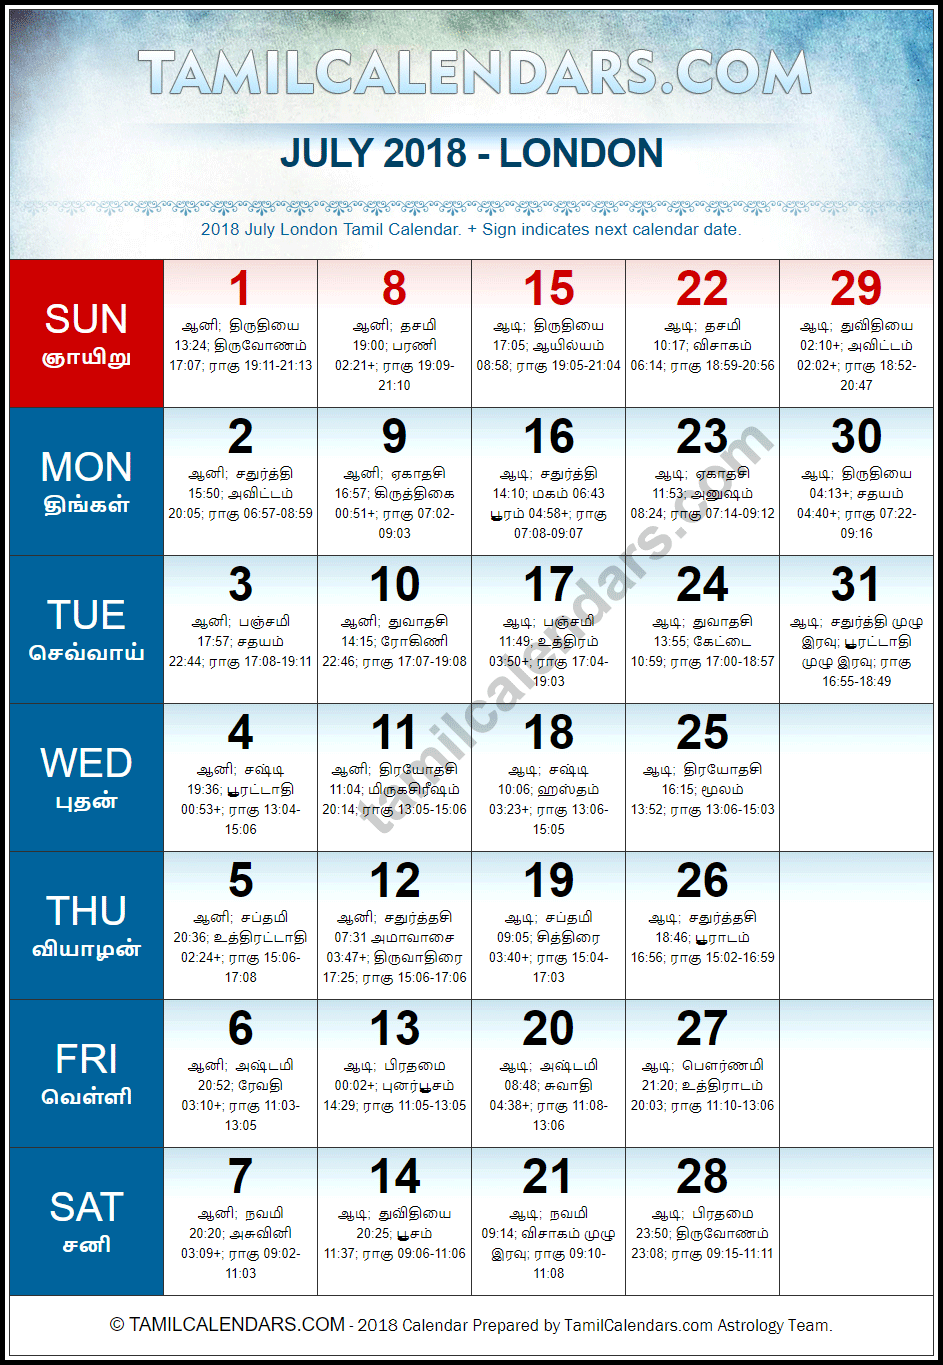 July 2018 Tamil Calendar for London, UK